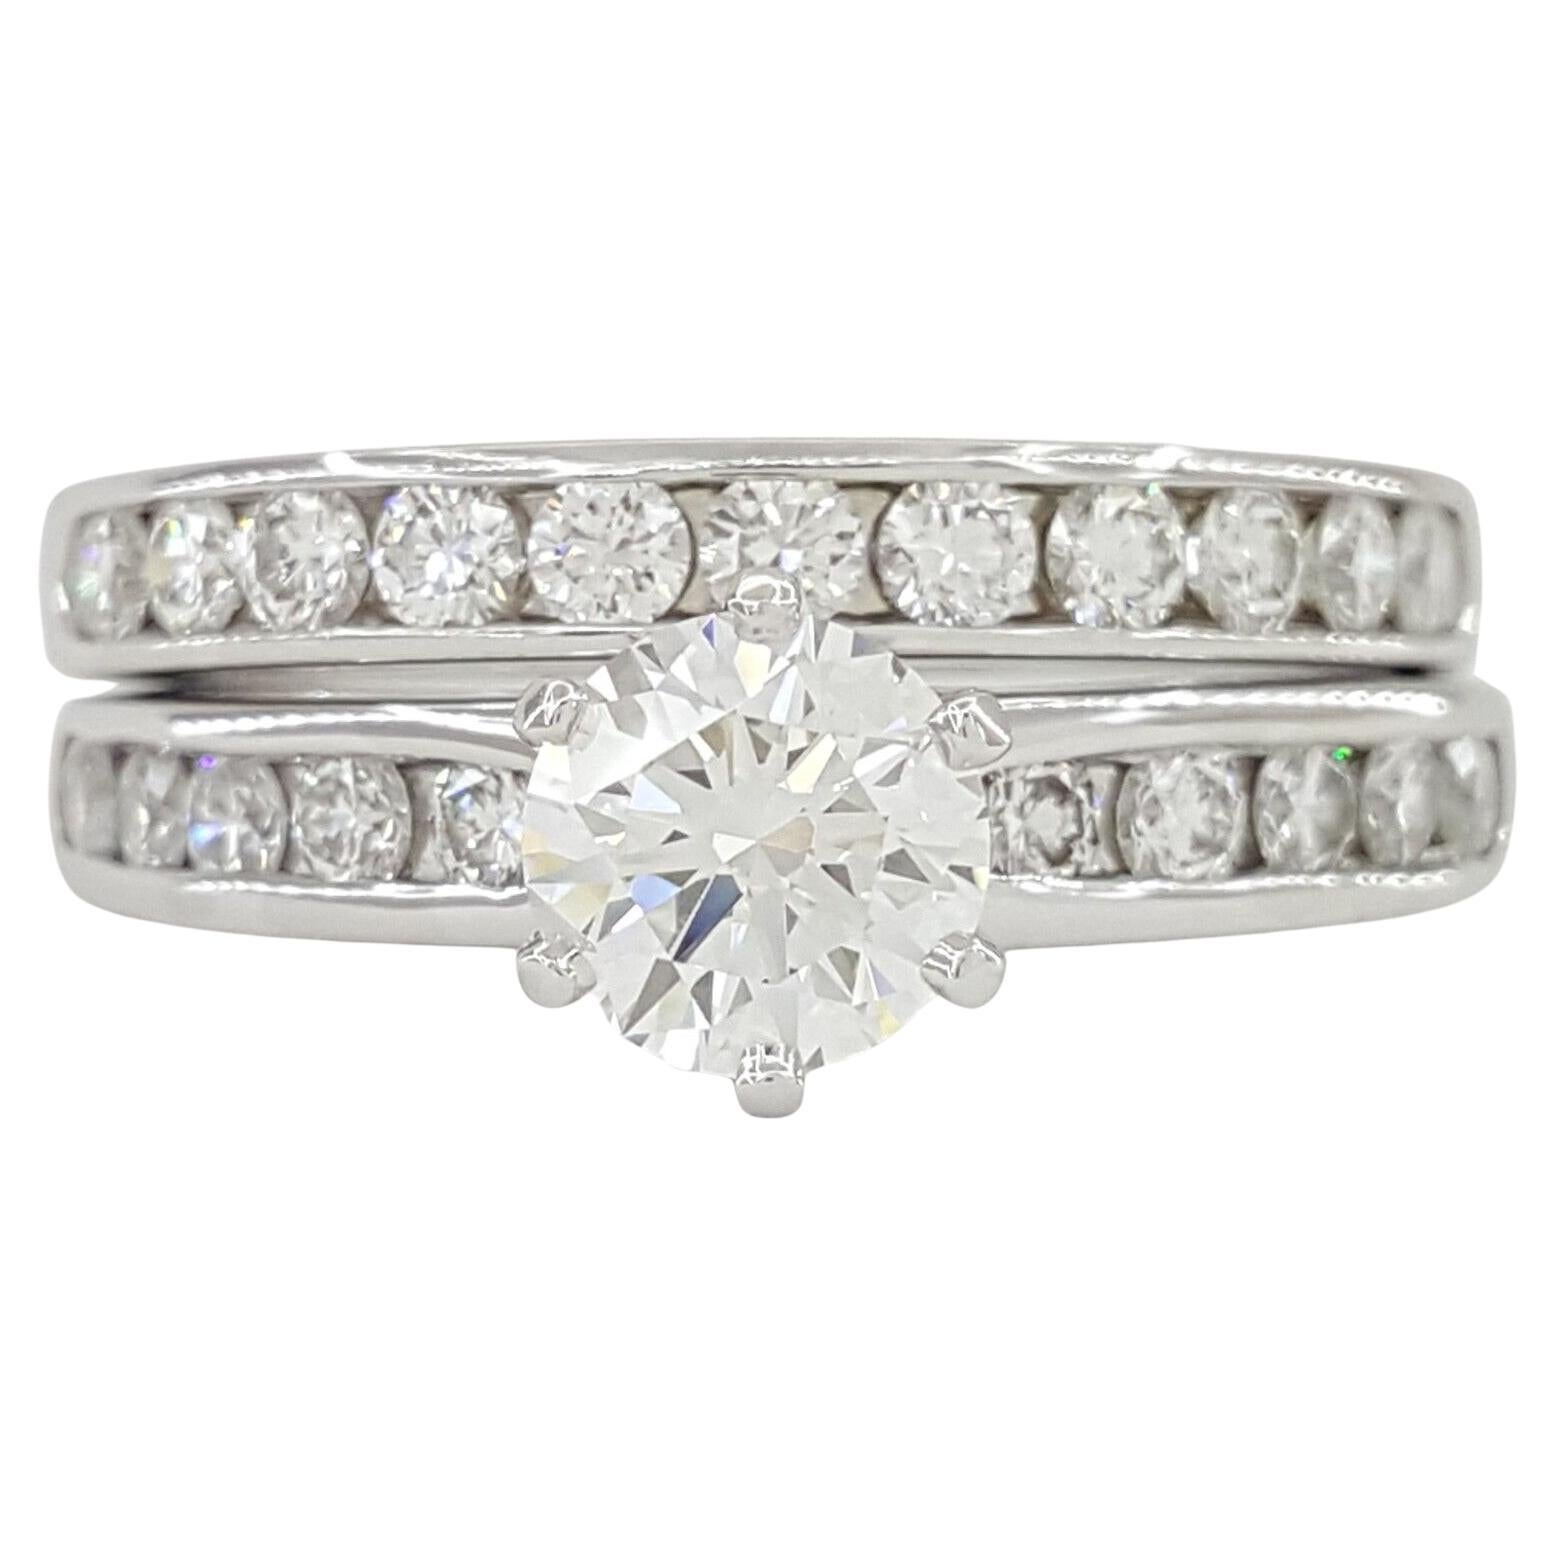  Tiffany & Co Platinum Channel-Set Diamond Engagement Ring & Band Set For Sale